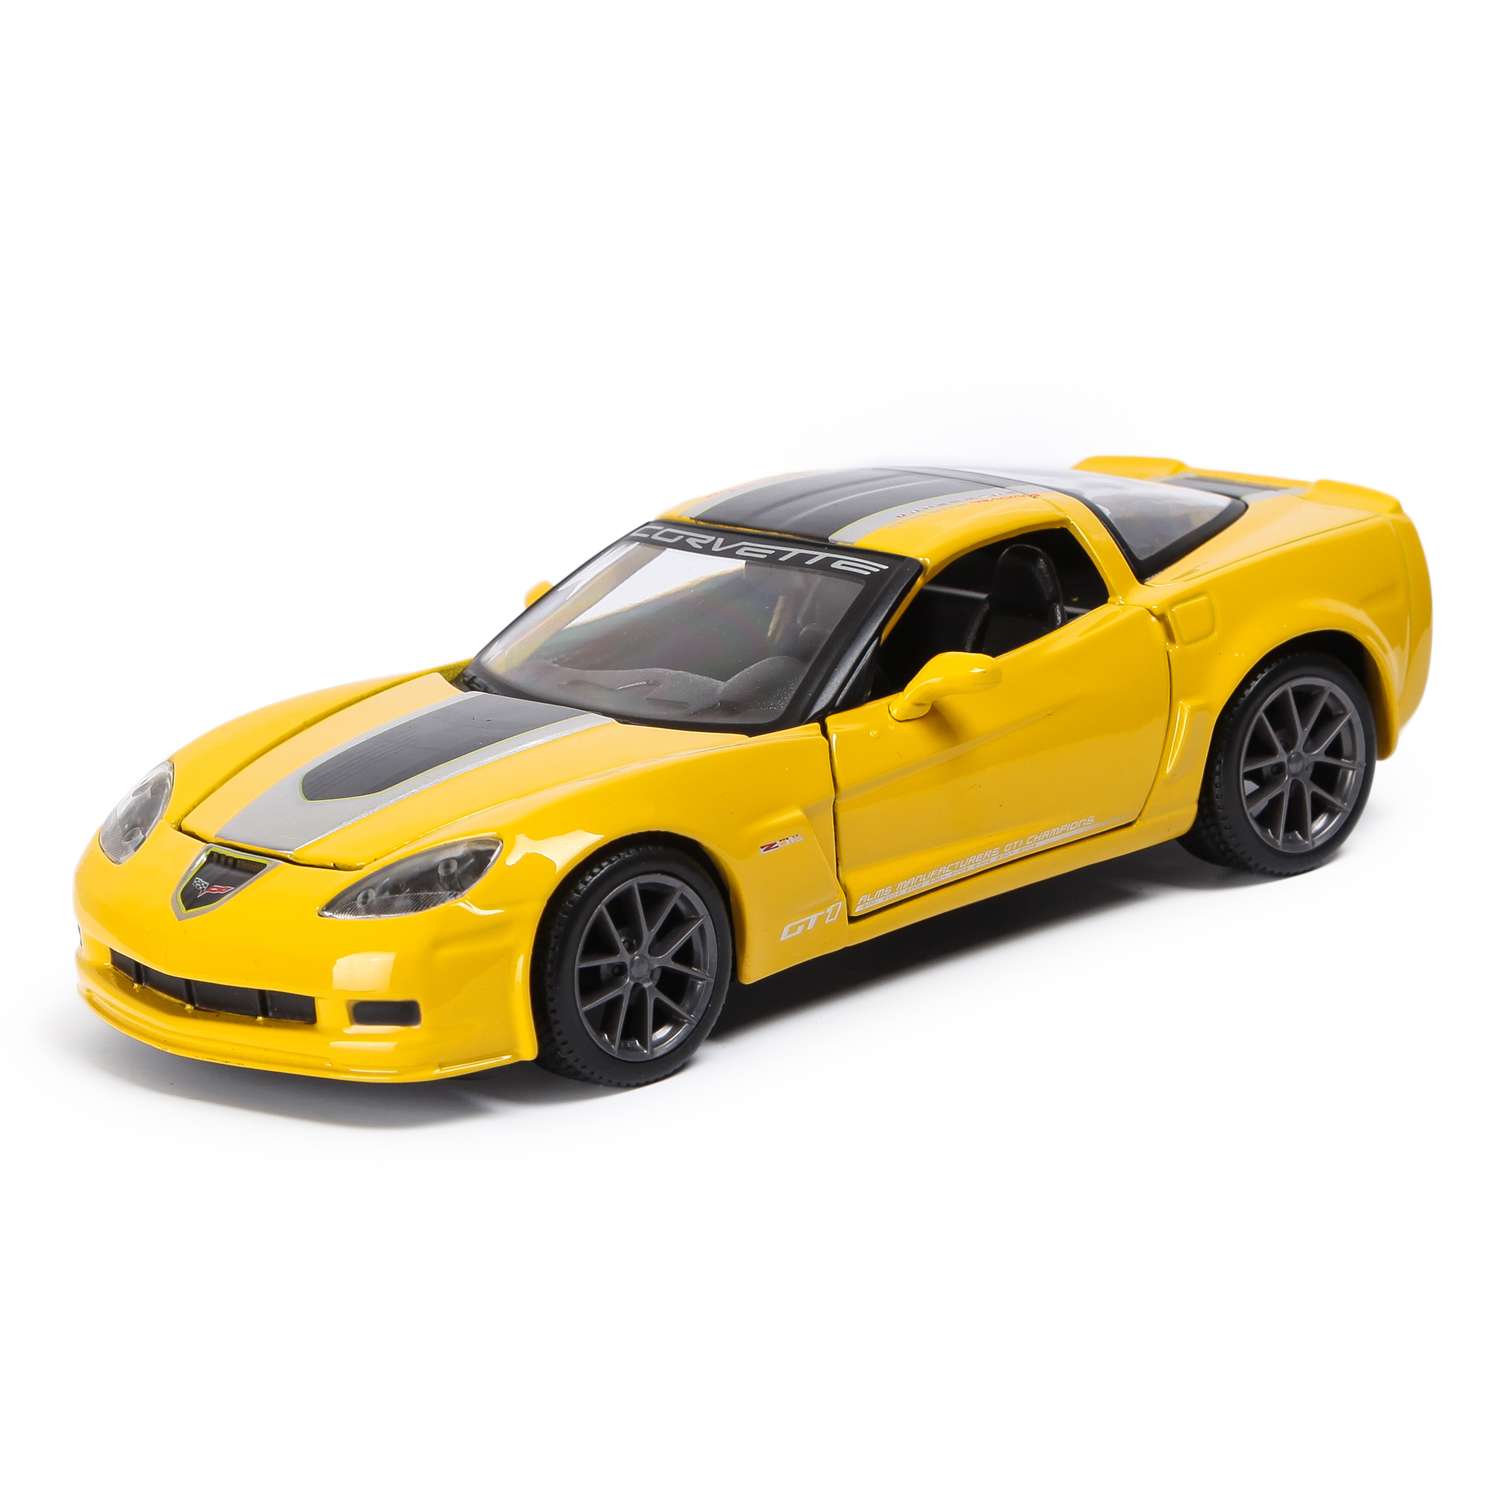 Машина MAISTO 1:24 Chevrolet Corvette Gt1 Желтый 31203 31203 - фото 1